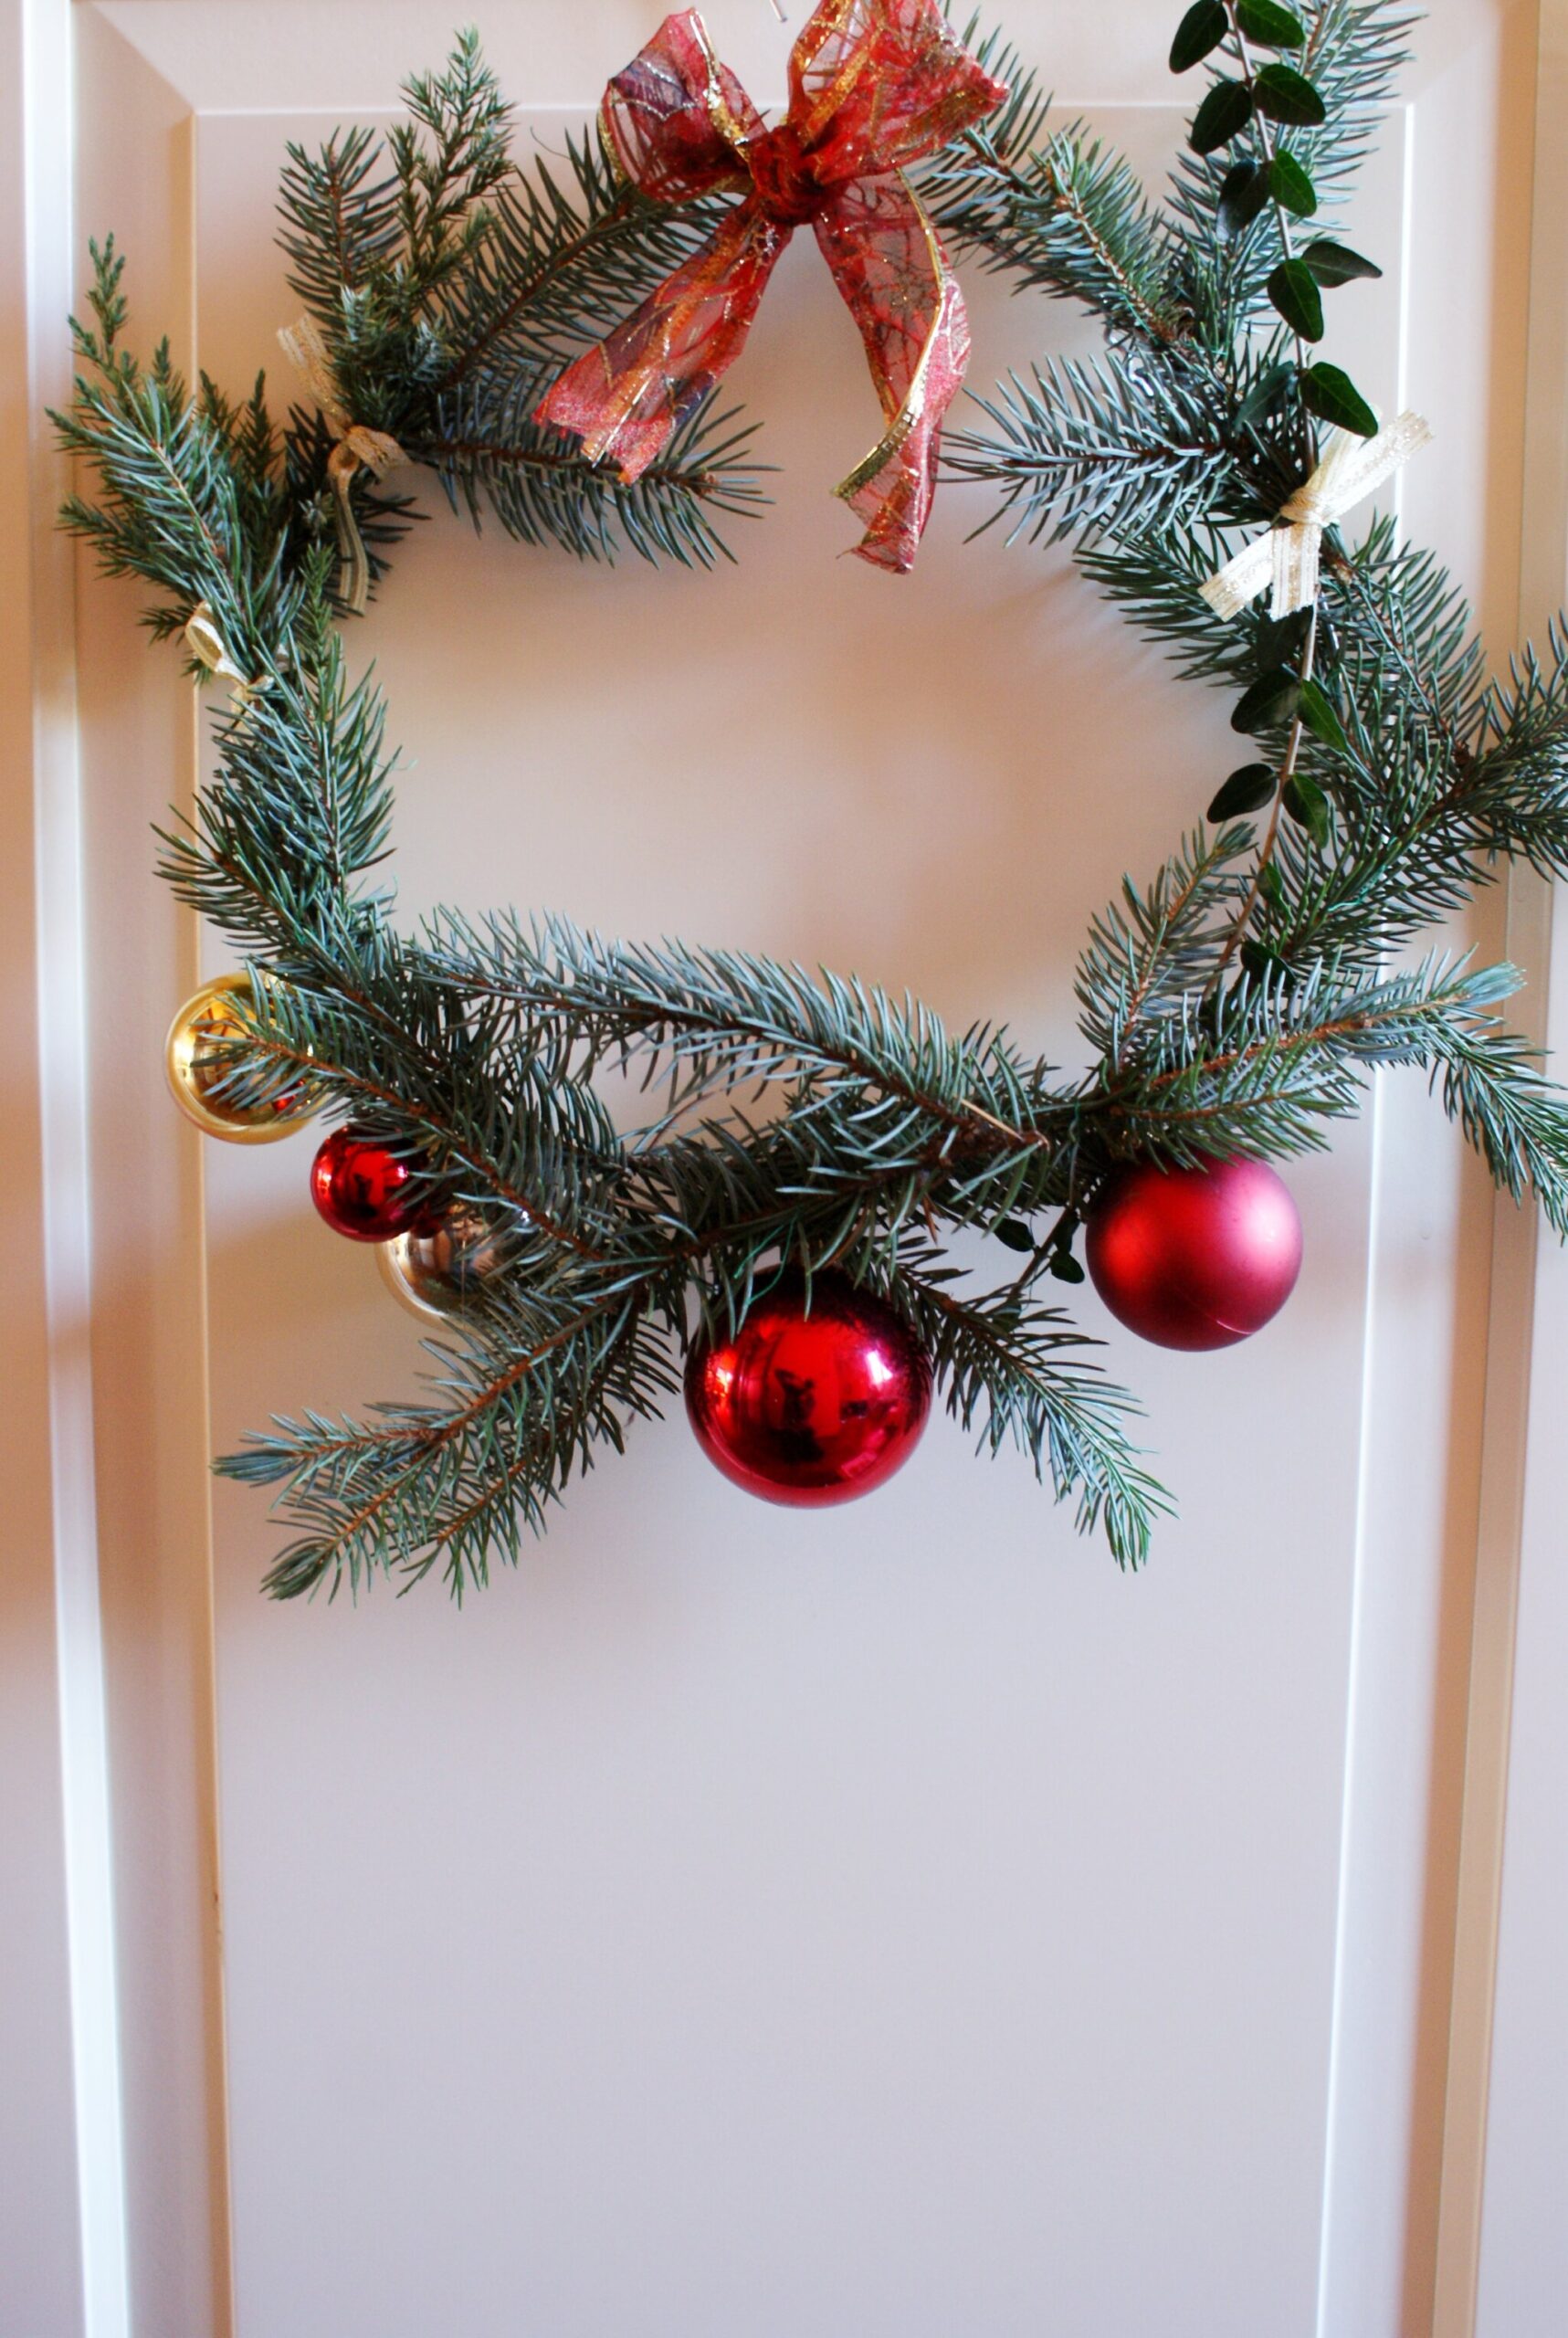 diy-christmas-wreath-idea-decor-garland-pine-easy-corona-ghirlanda-natale-faidate-pino-balls-palline-francinesplaceblog-11-scaled.jpg